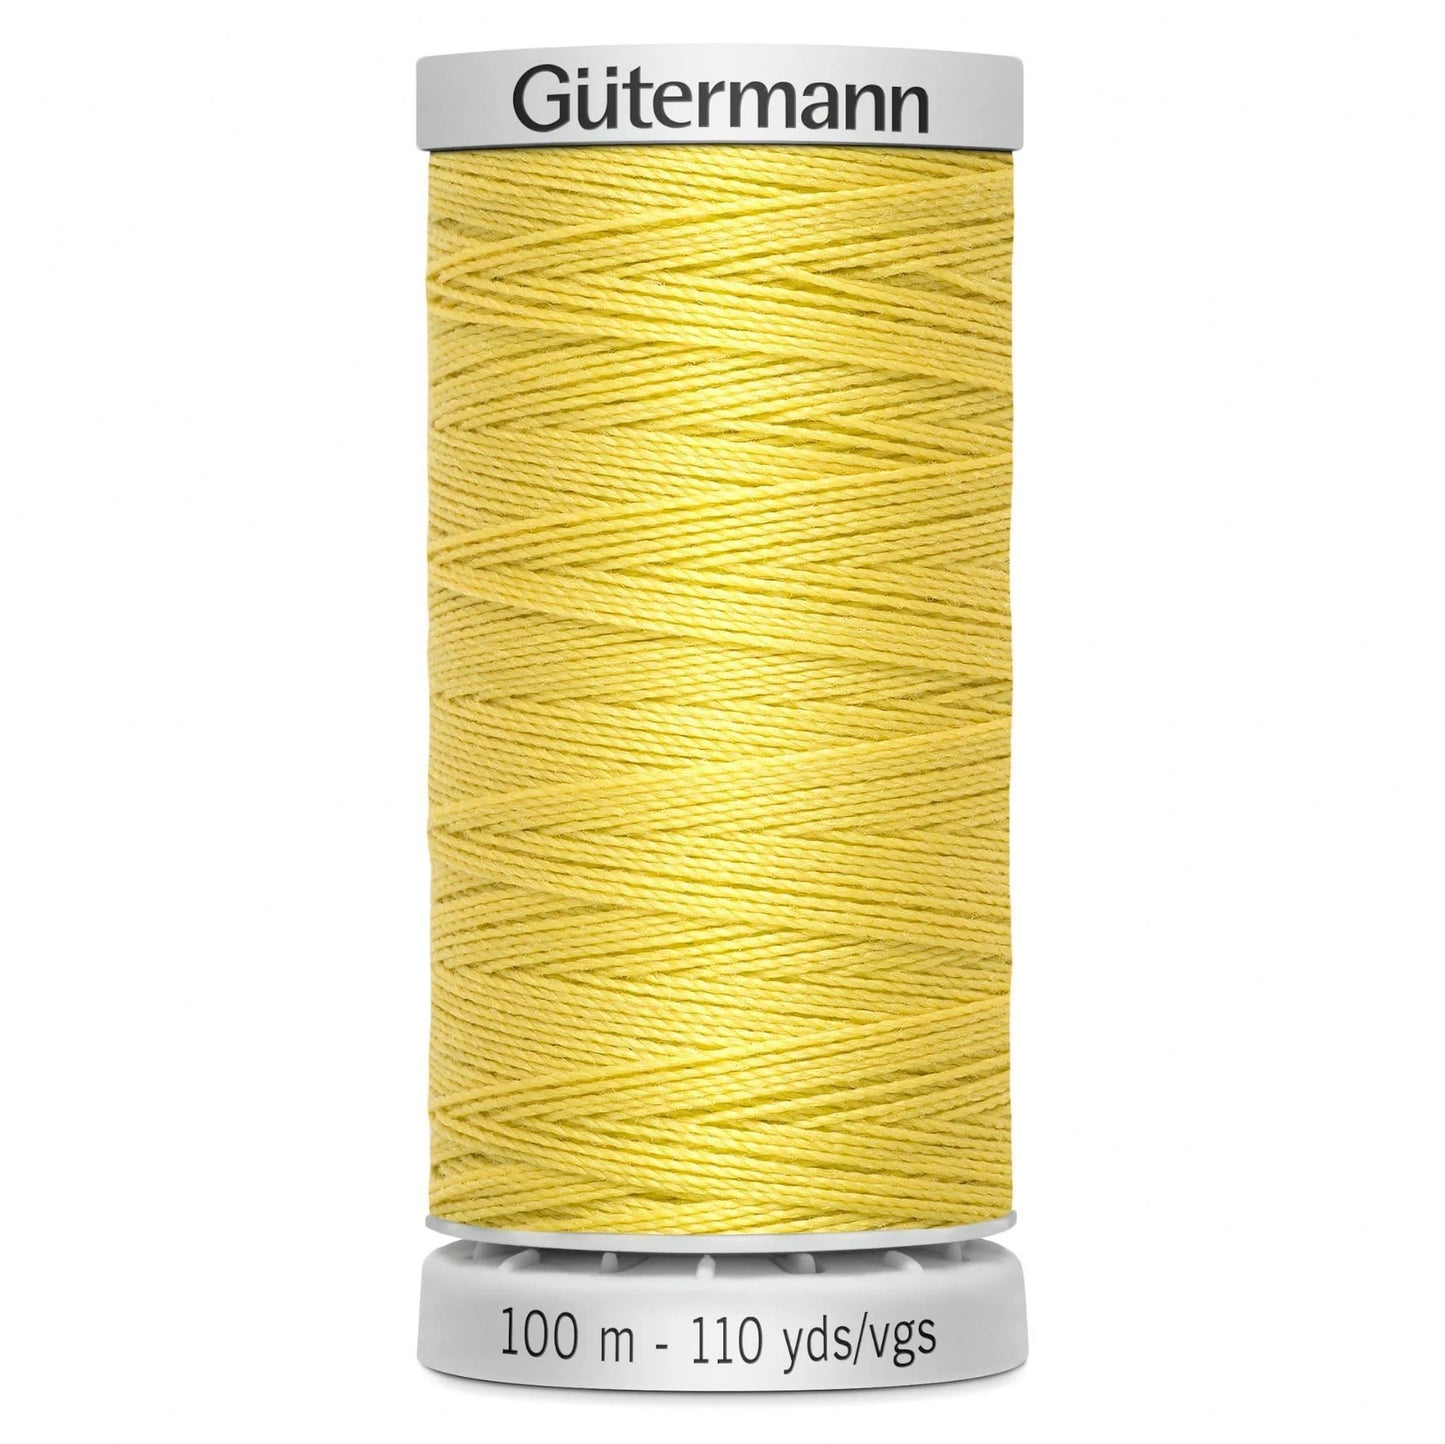 327 Gutermann Extra Strong Thread 100m - Yellow